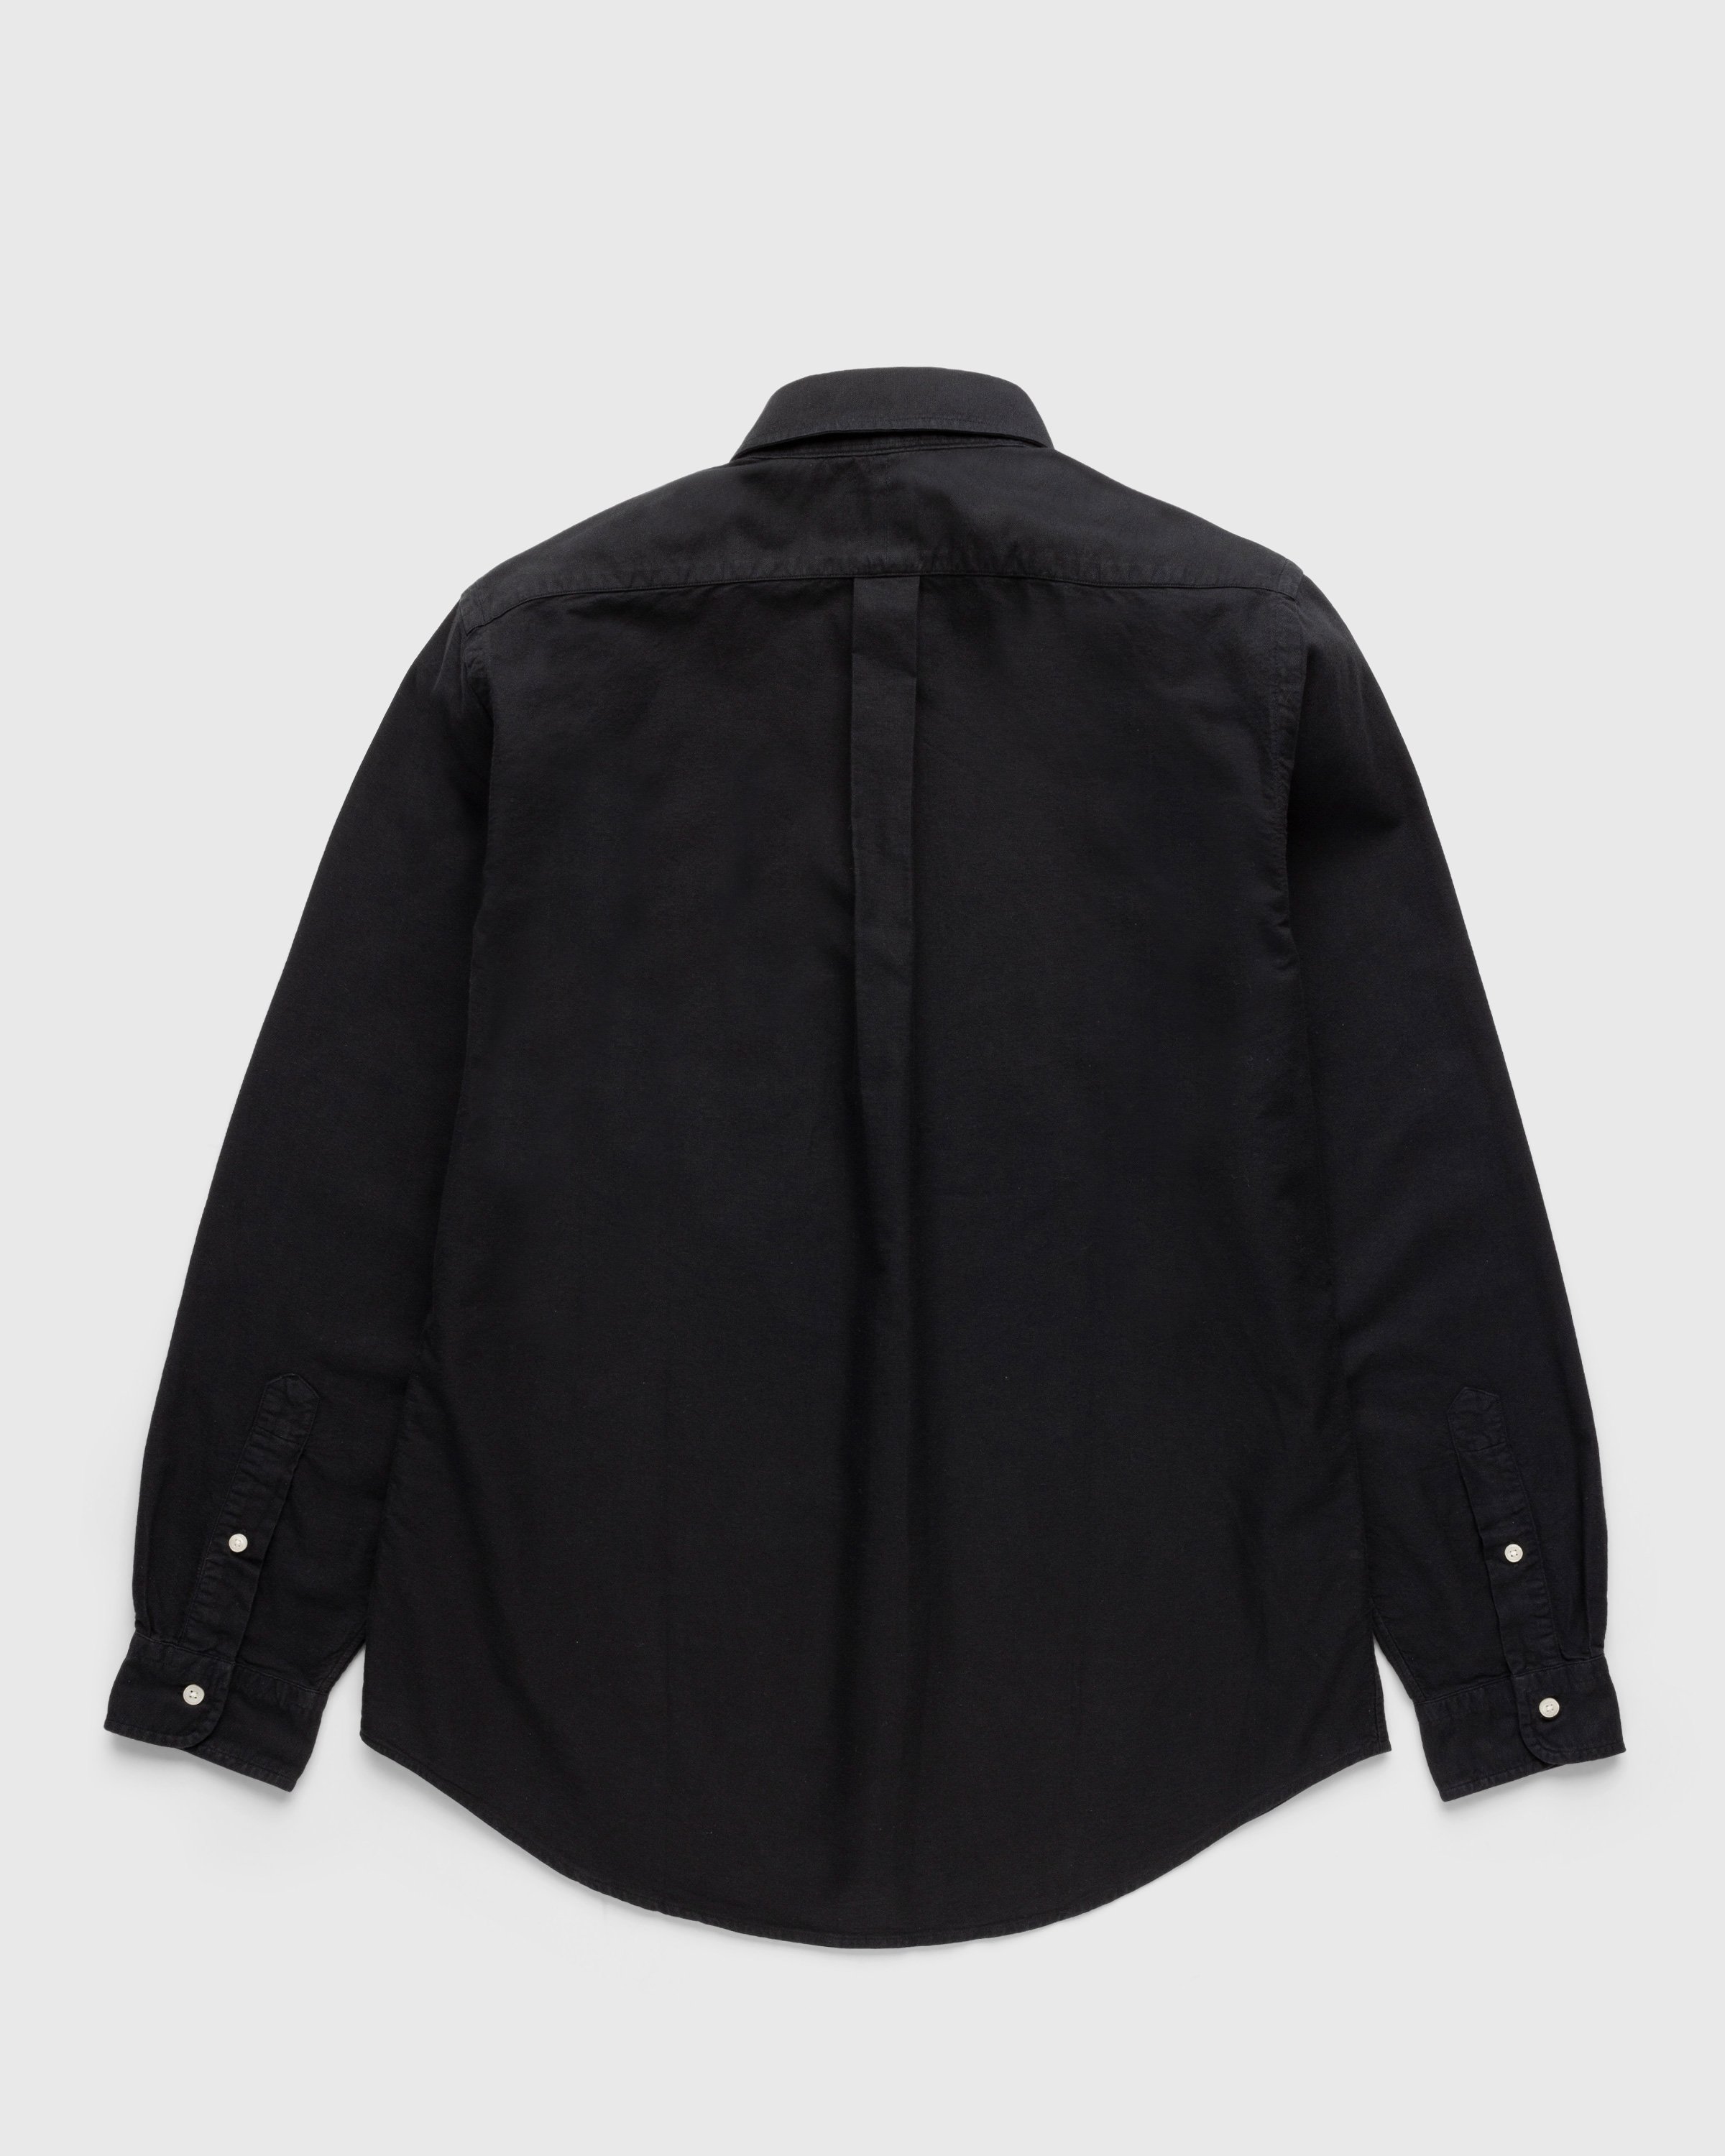 Ralph Lauren x Fortnite - Long Sleeve Sport Shirt Black - Clothing - Black - Image 2